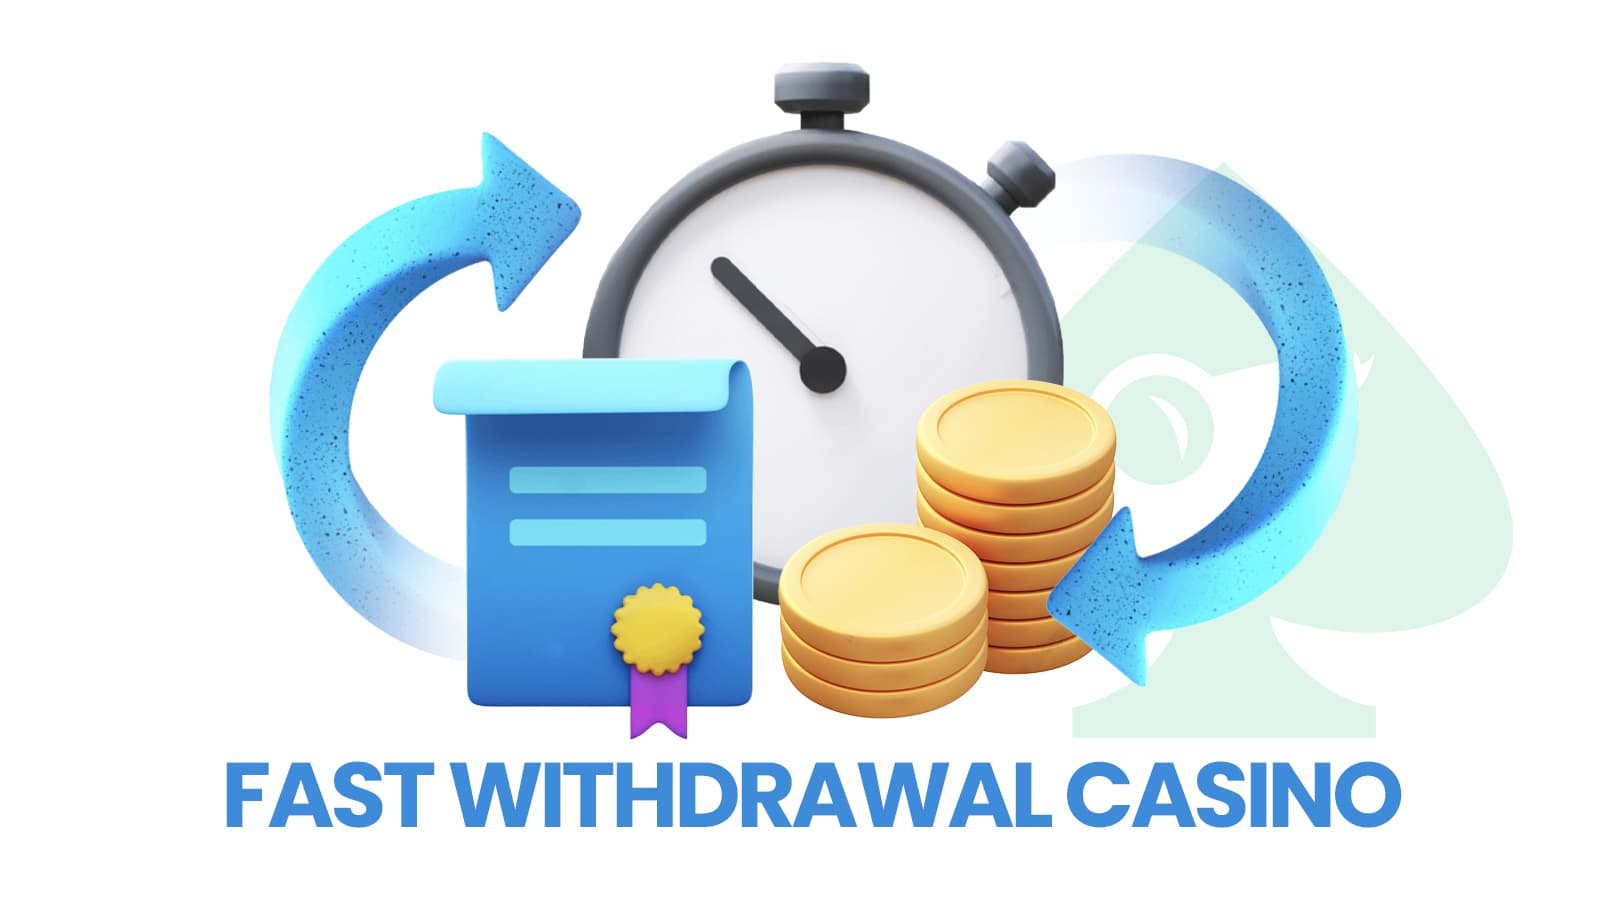 Fast withdrawal casino